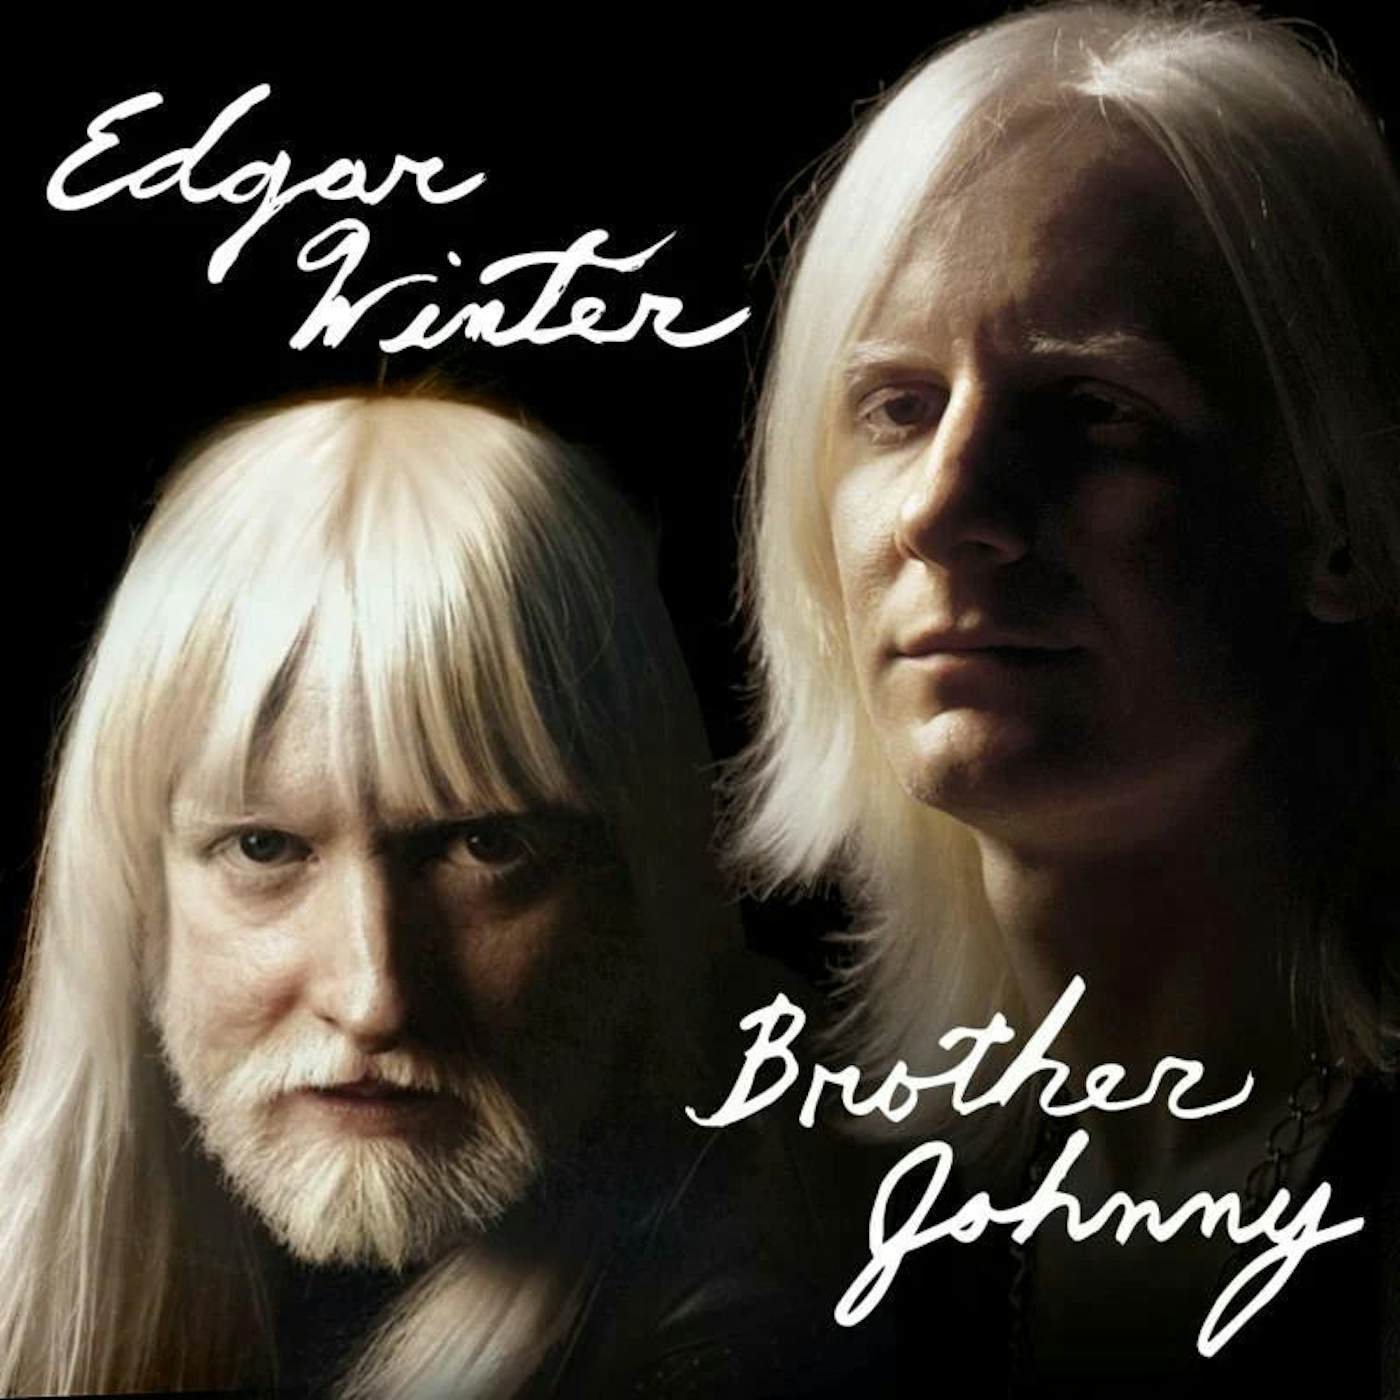 Edgar Winter LP - Brother Johnny (Vinyl)